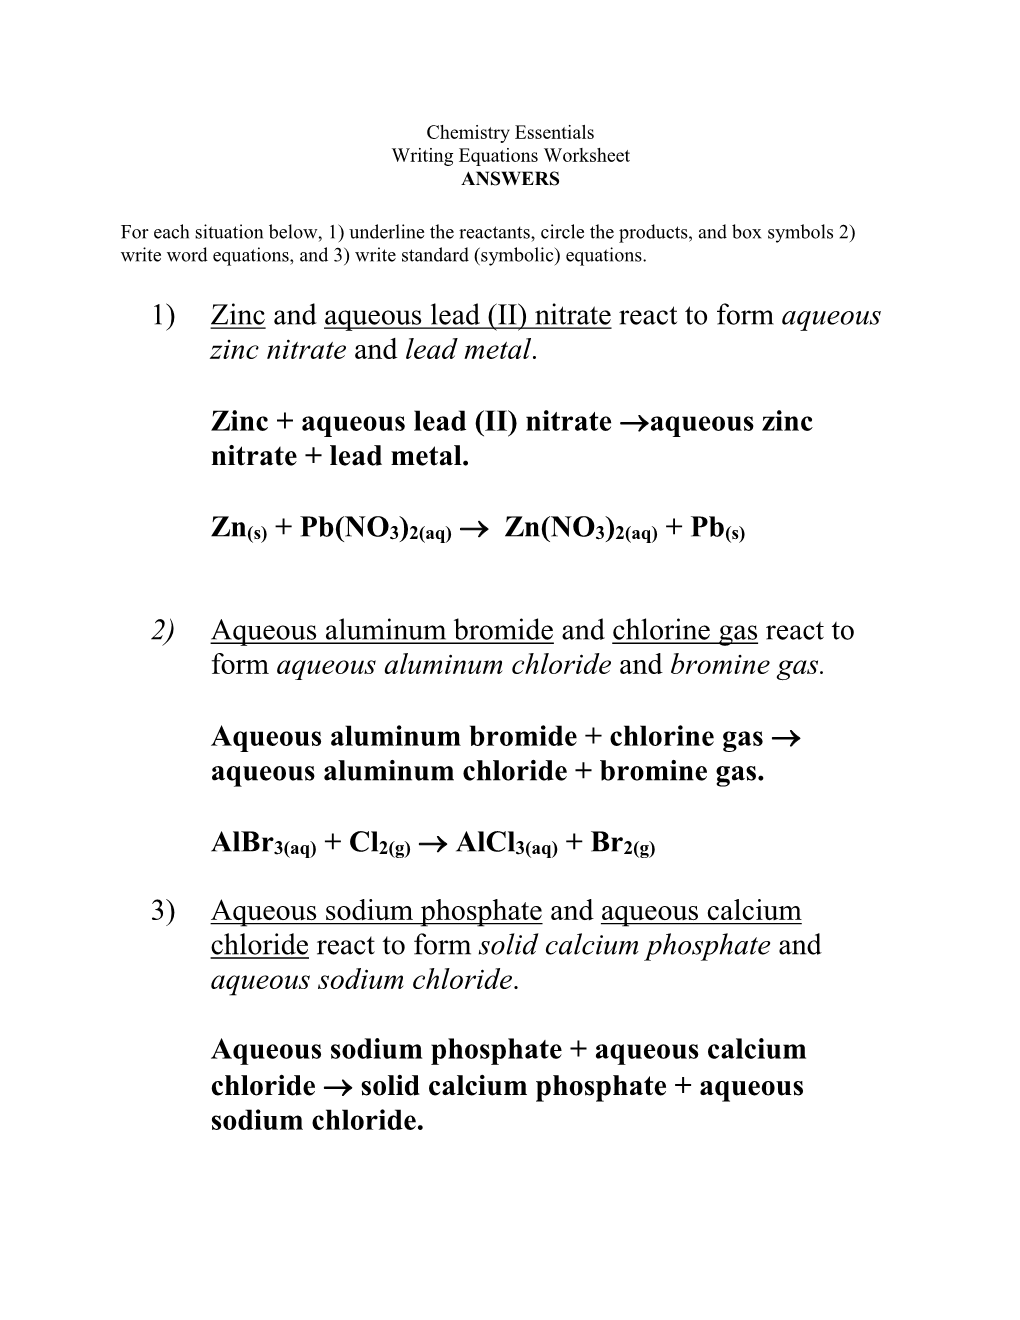 (II) Nitrate React to Form Aqueous Zinc Nitrate and Lead Metal. Zinc +